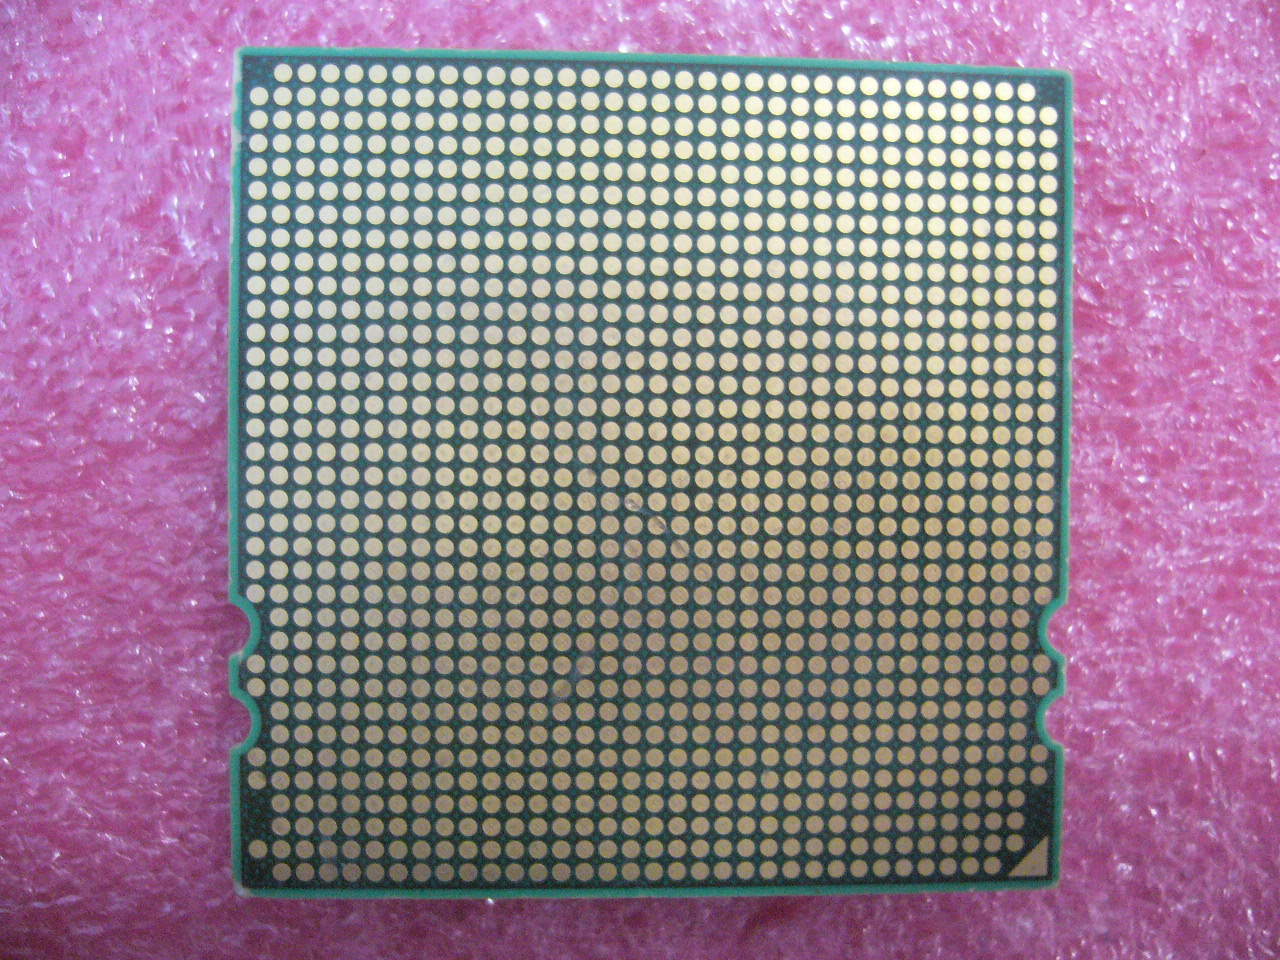 QTY 1x AMD Opteron 2358 SE 2.4 GHz Quad-Core (OS2358YAL4BGH) CPU Socket F 1207 - Click Image to Close